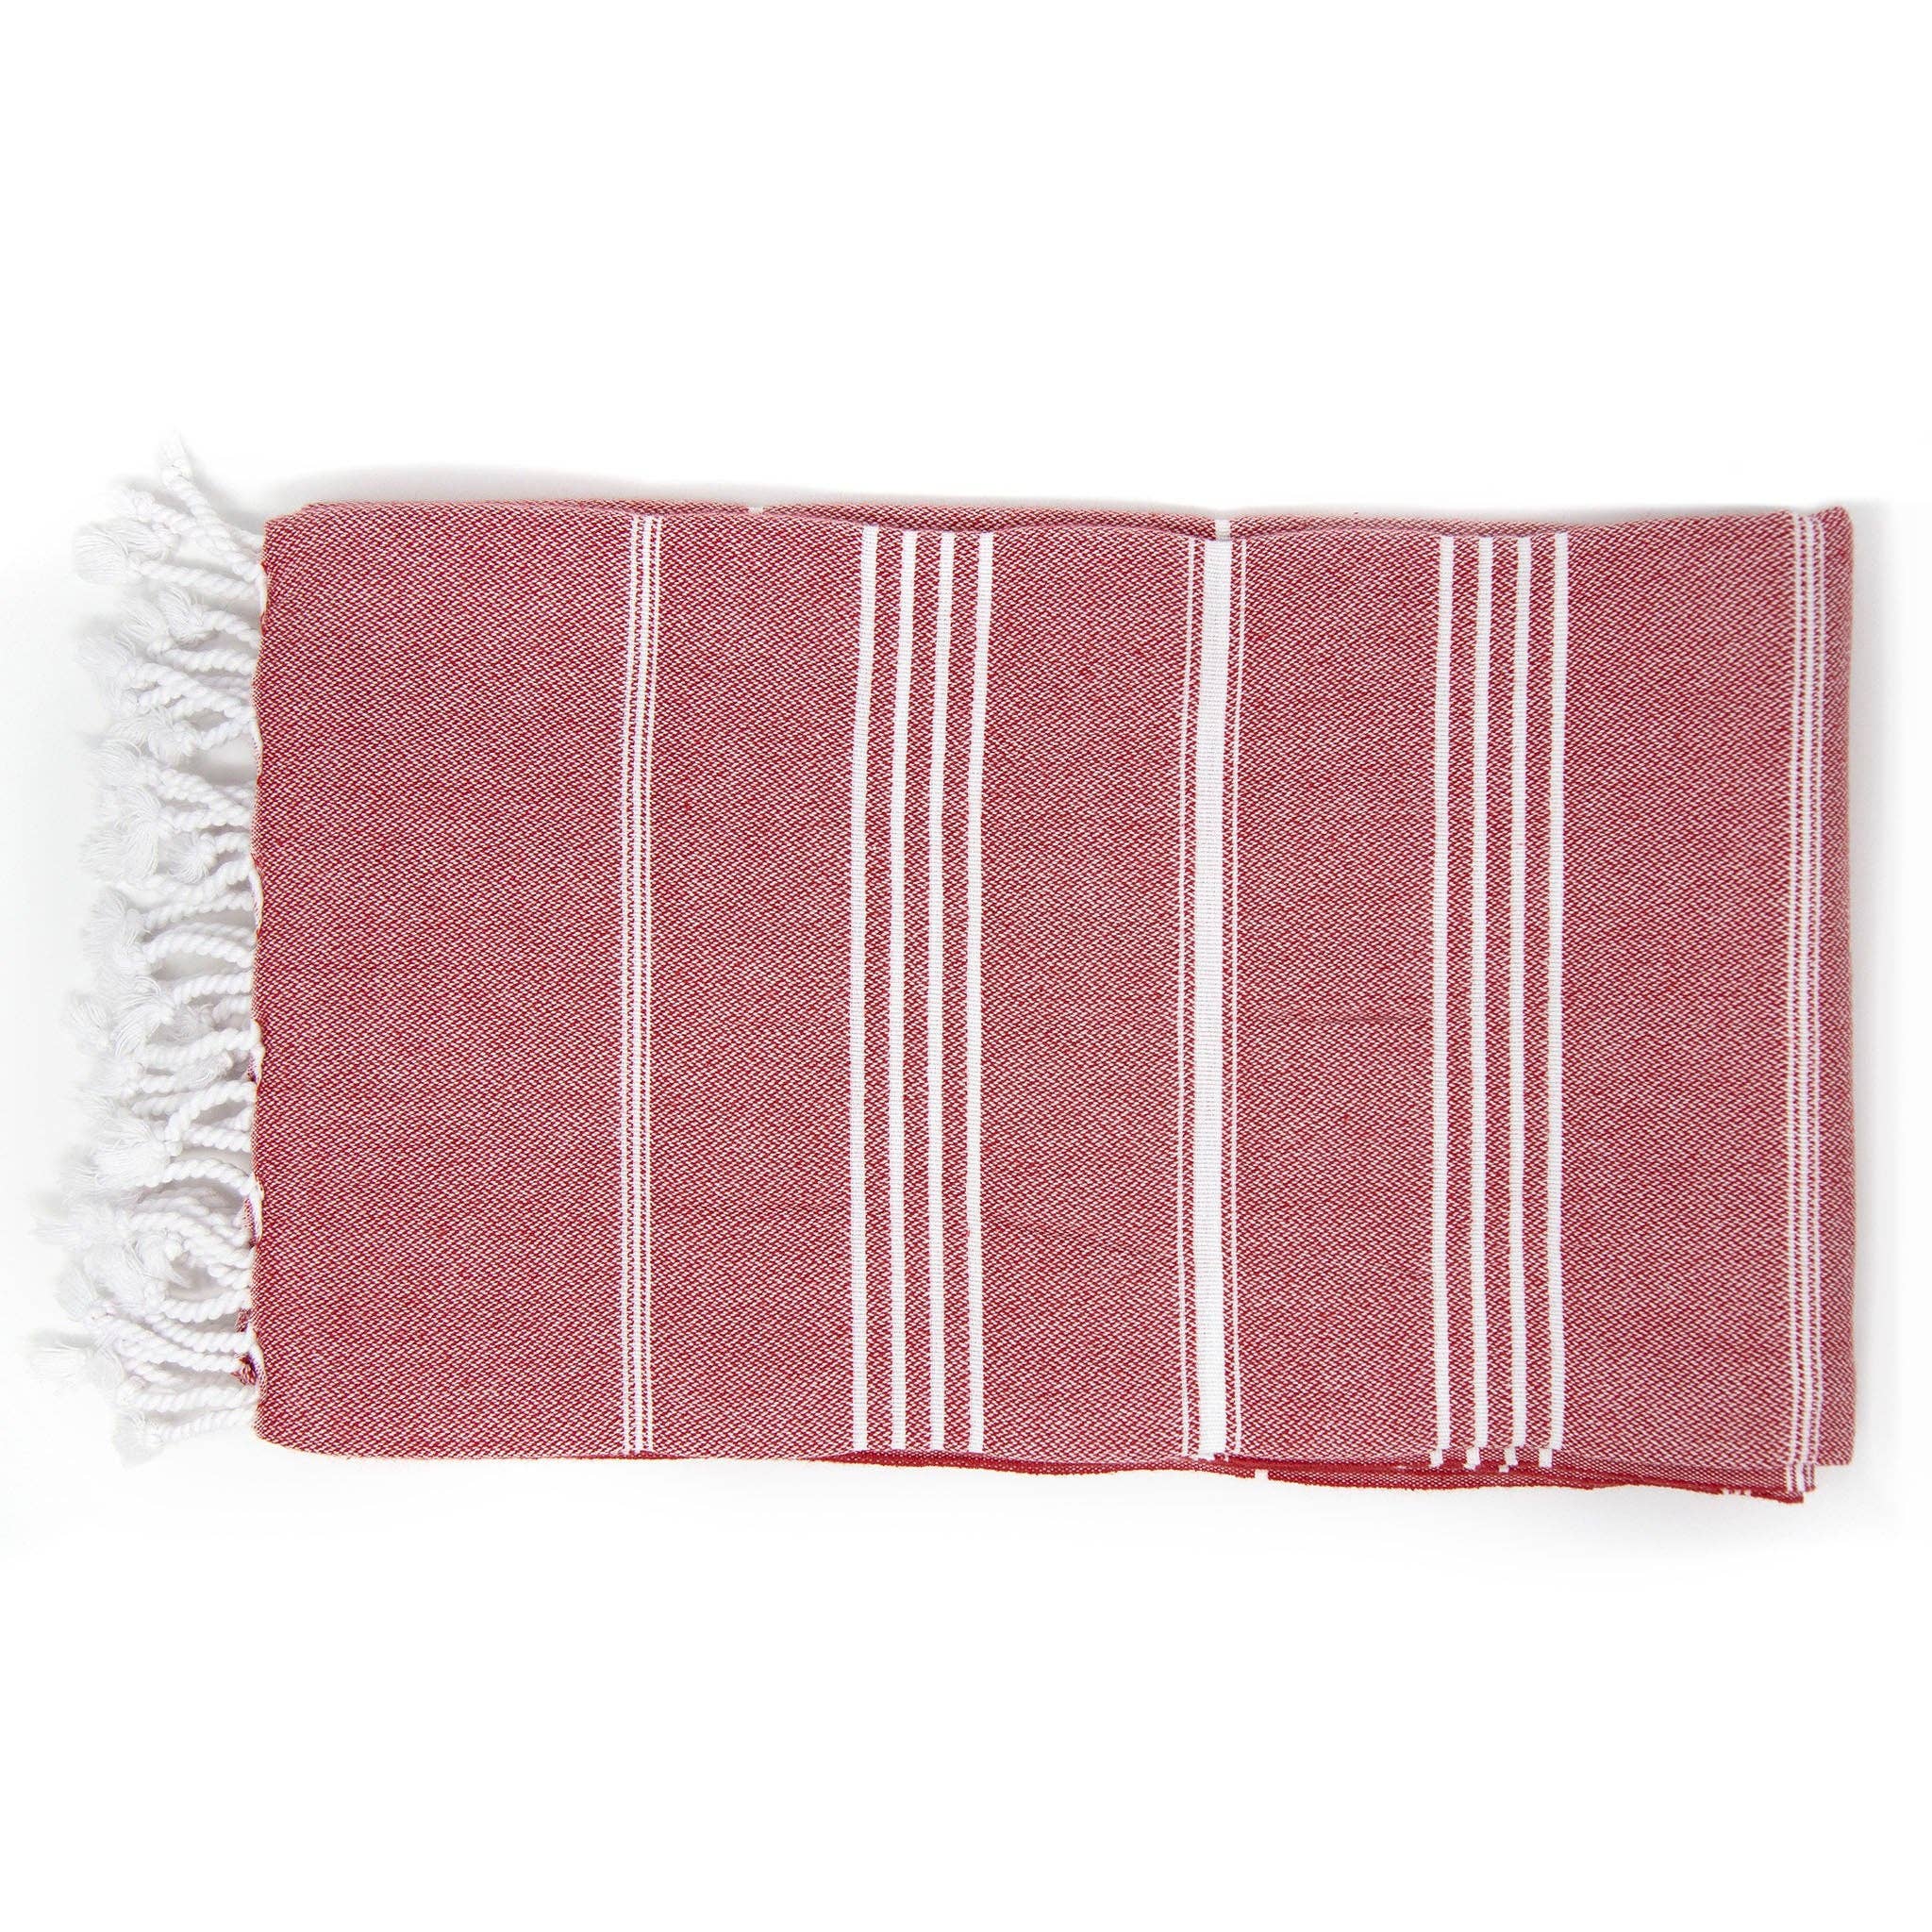 Coccinella- Mediterranean Heritage  - Classic Beach Towel (7802962706659)